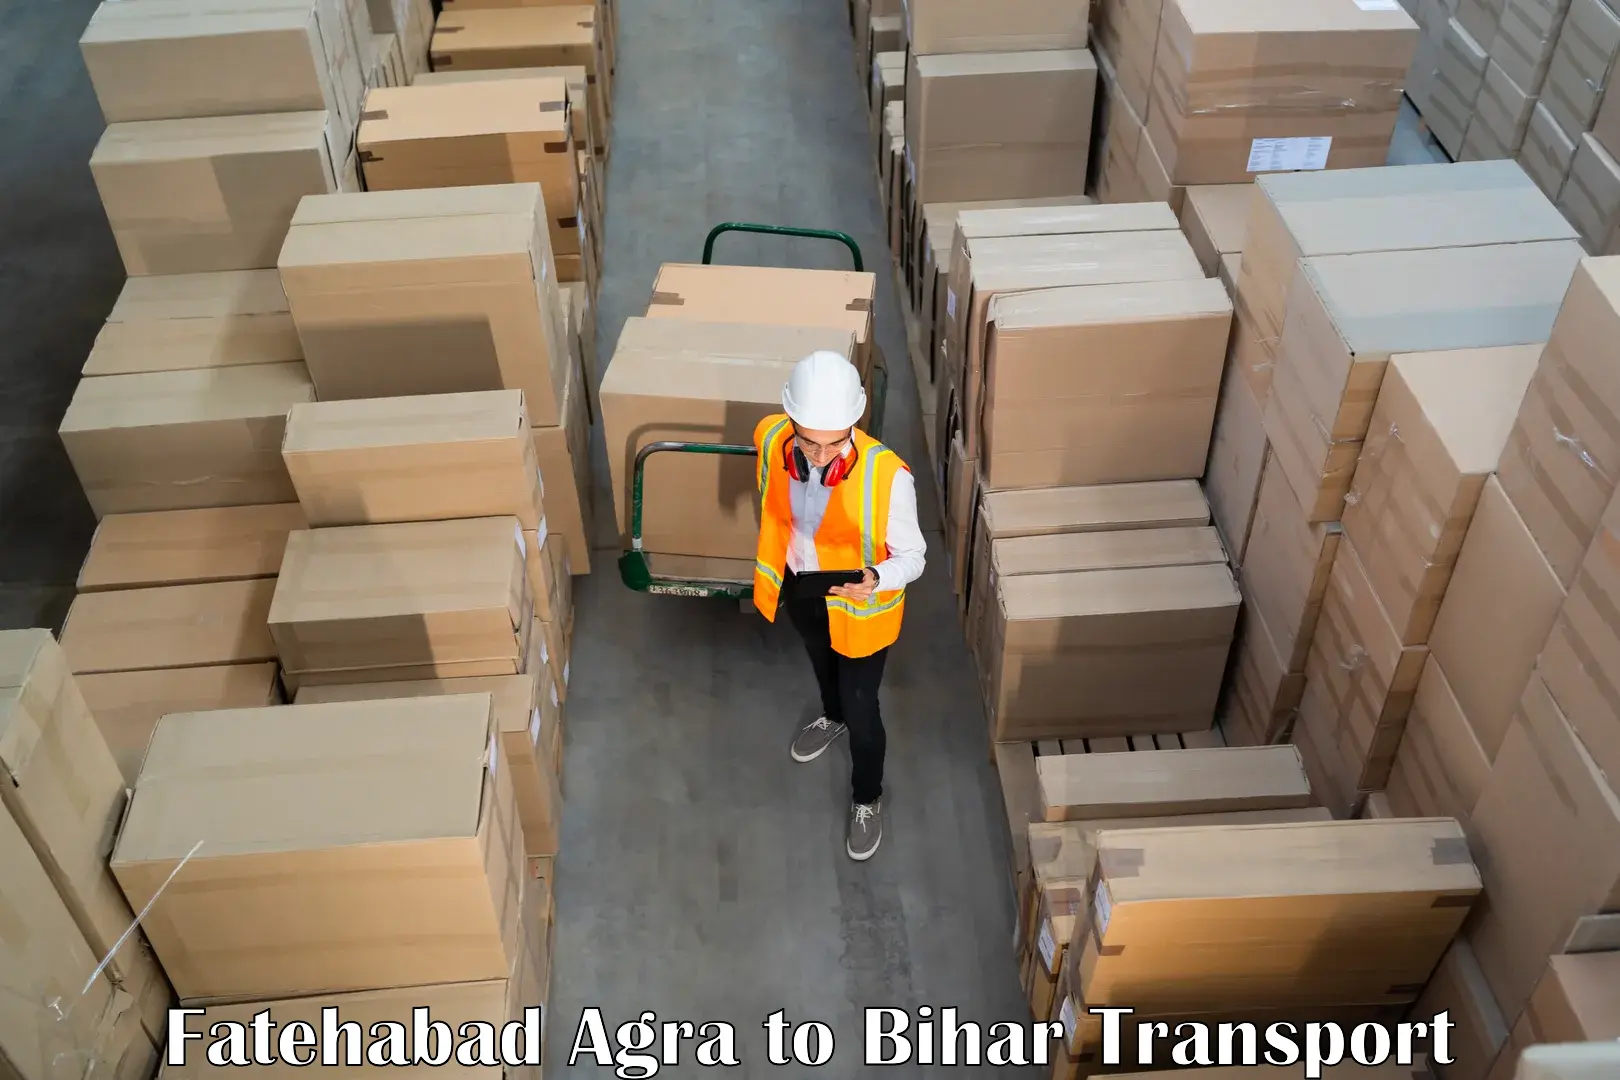 Shipping partner Fatehabad Agra to Sheohar